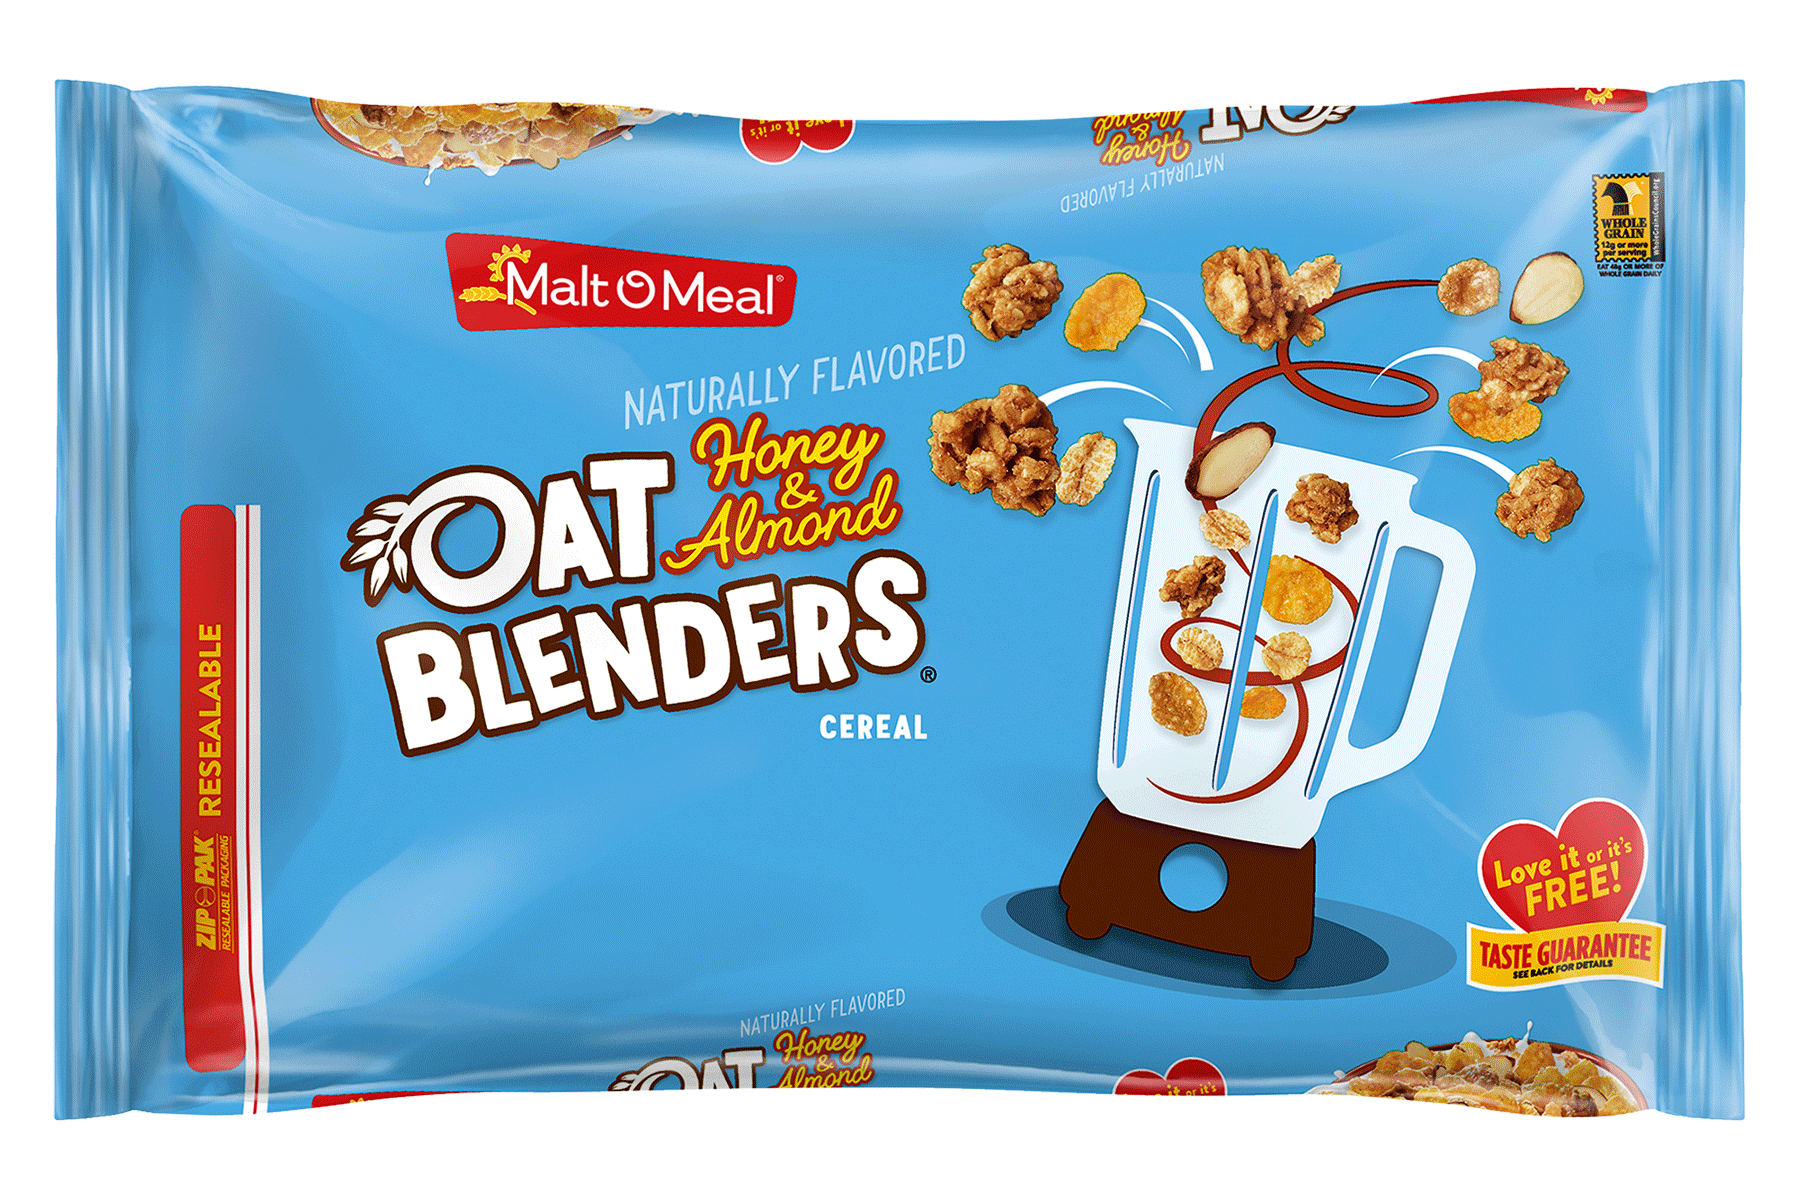 New Malt-O-Meal Honey and Almond Oat Blenders Cereal Bag